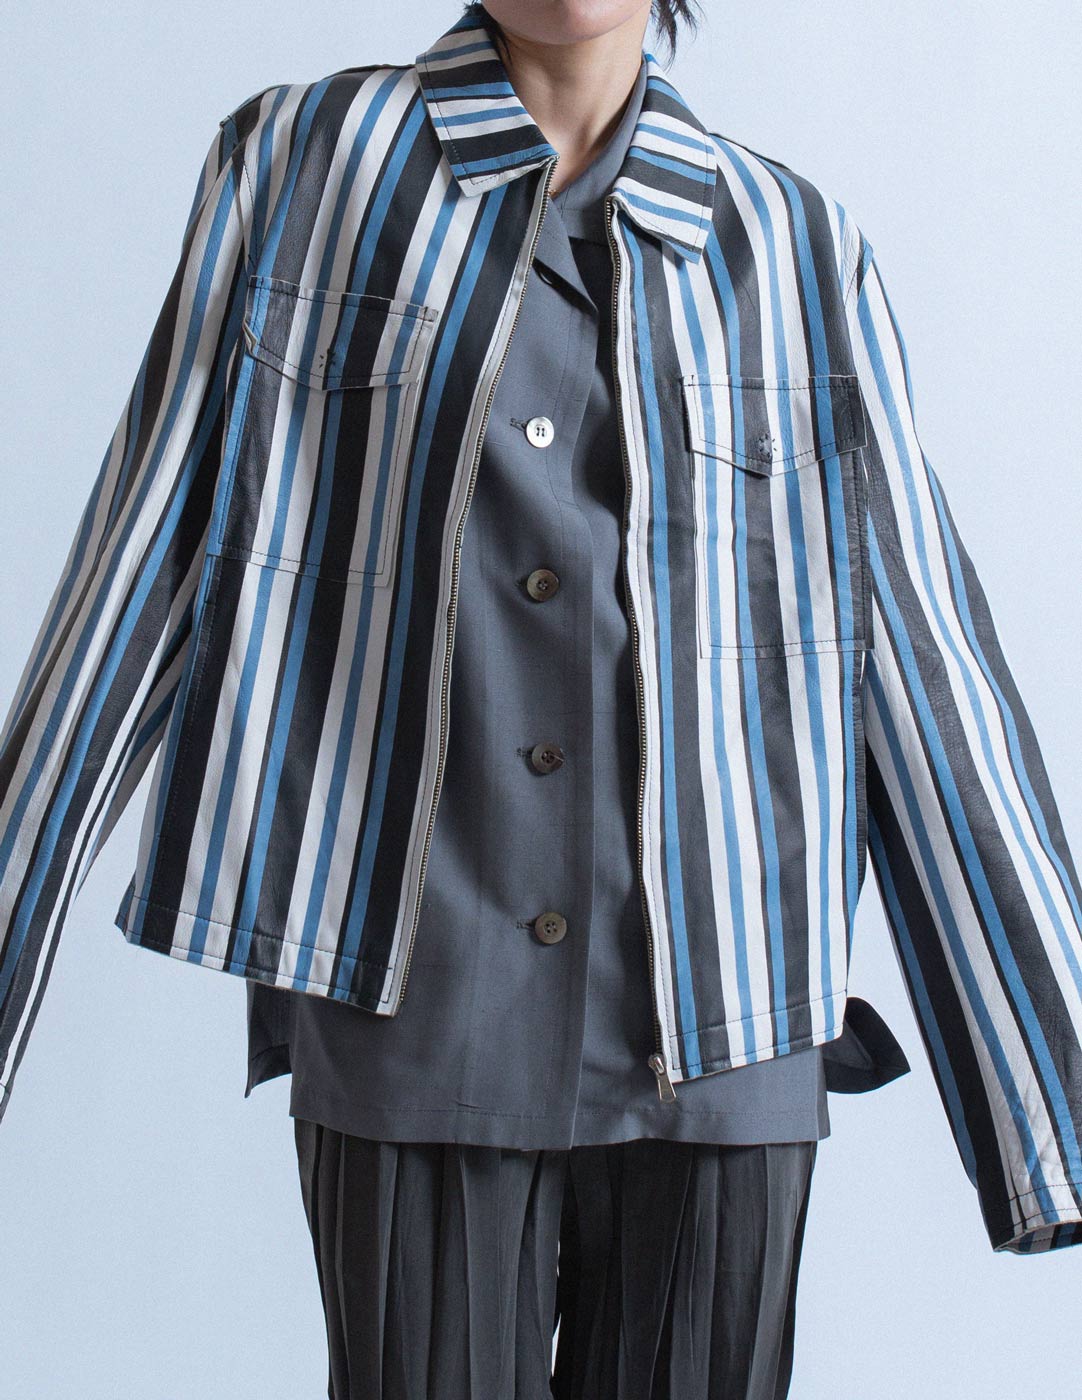 D&G vintage striped leather jacket open detail